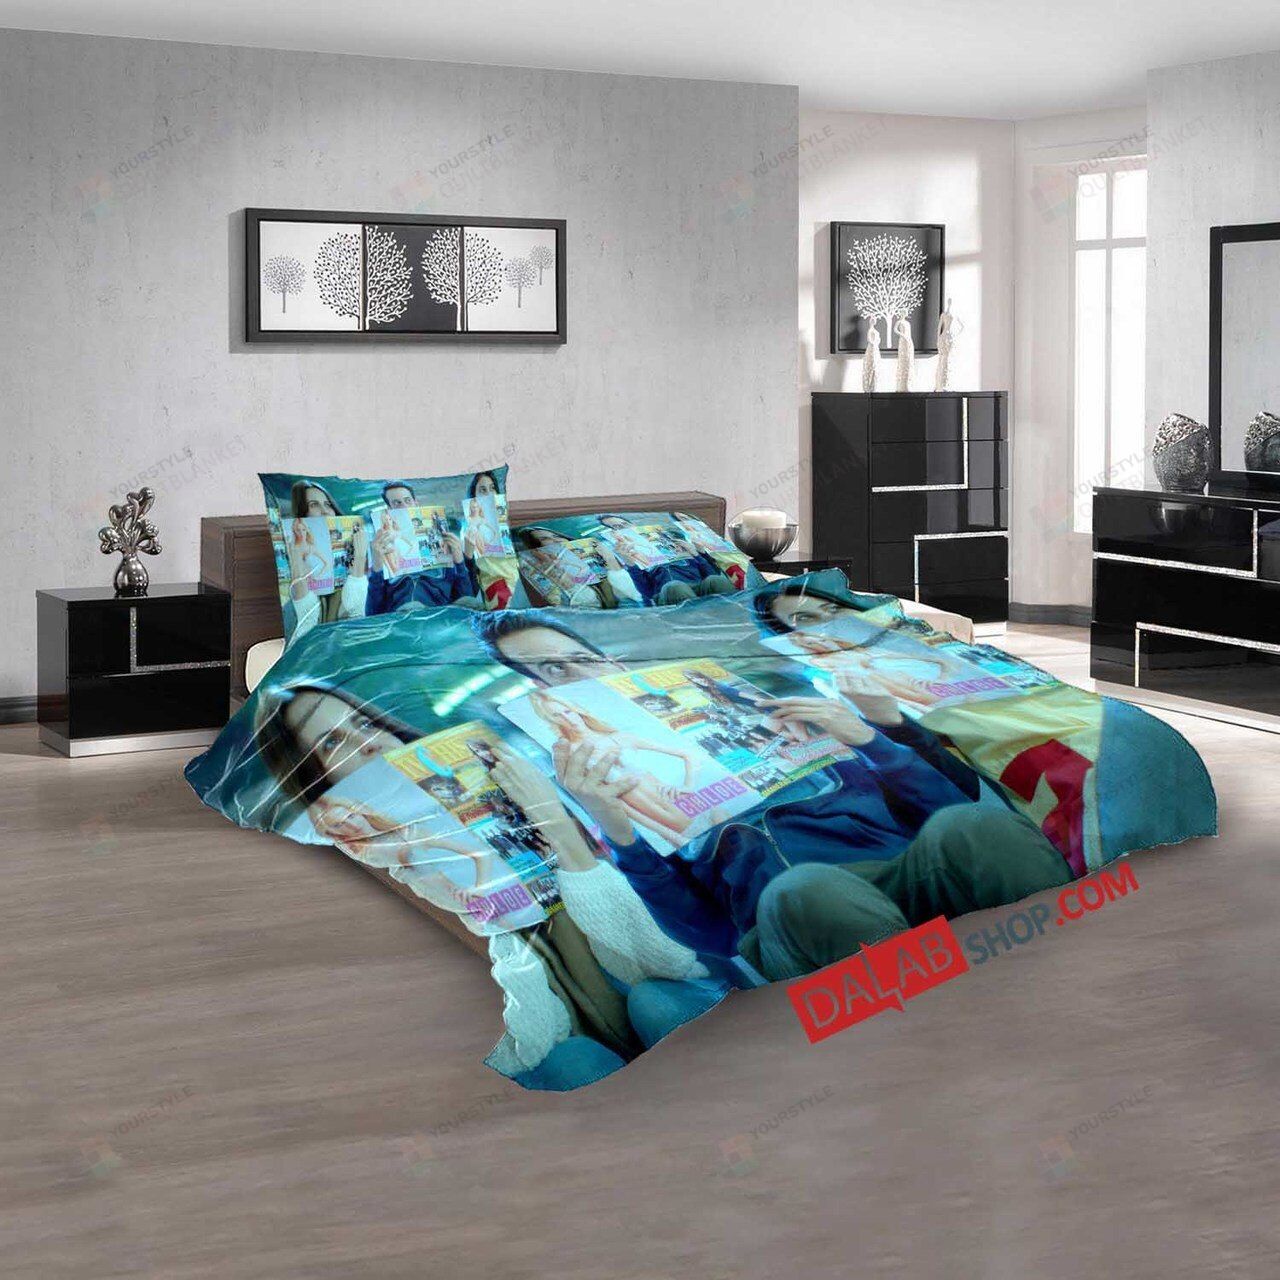 Movie El Club De Los Insomnes N 3d Duvet Cover Bedroom Sets Bedding Sets